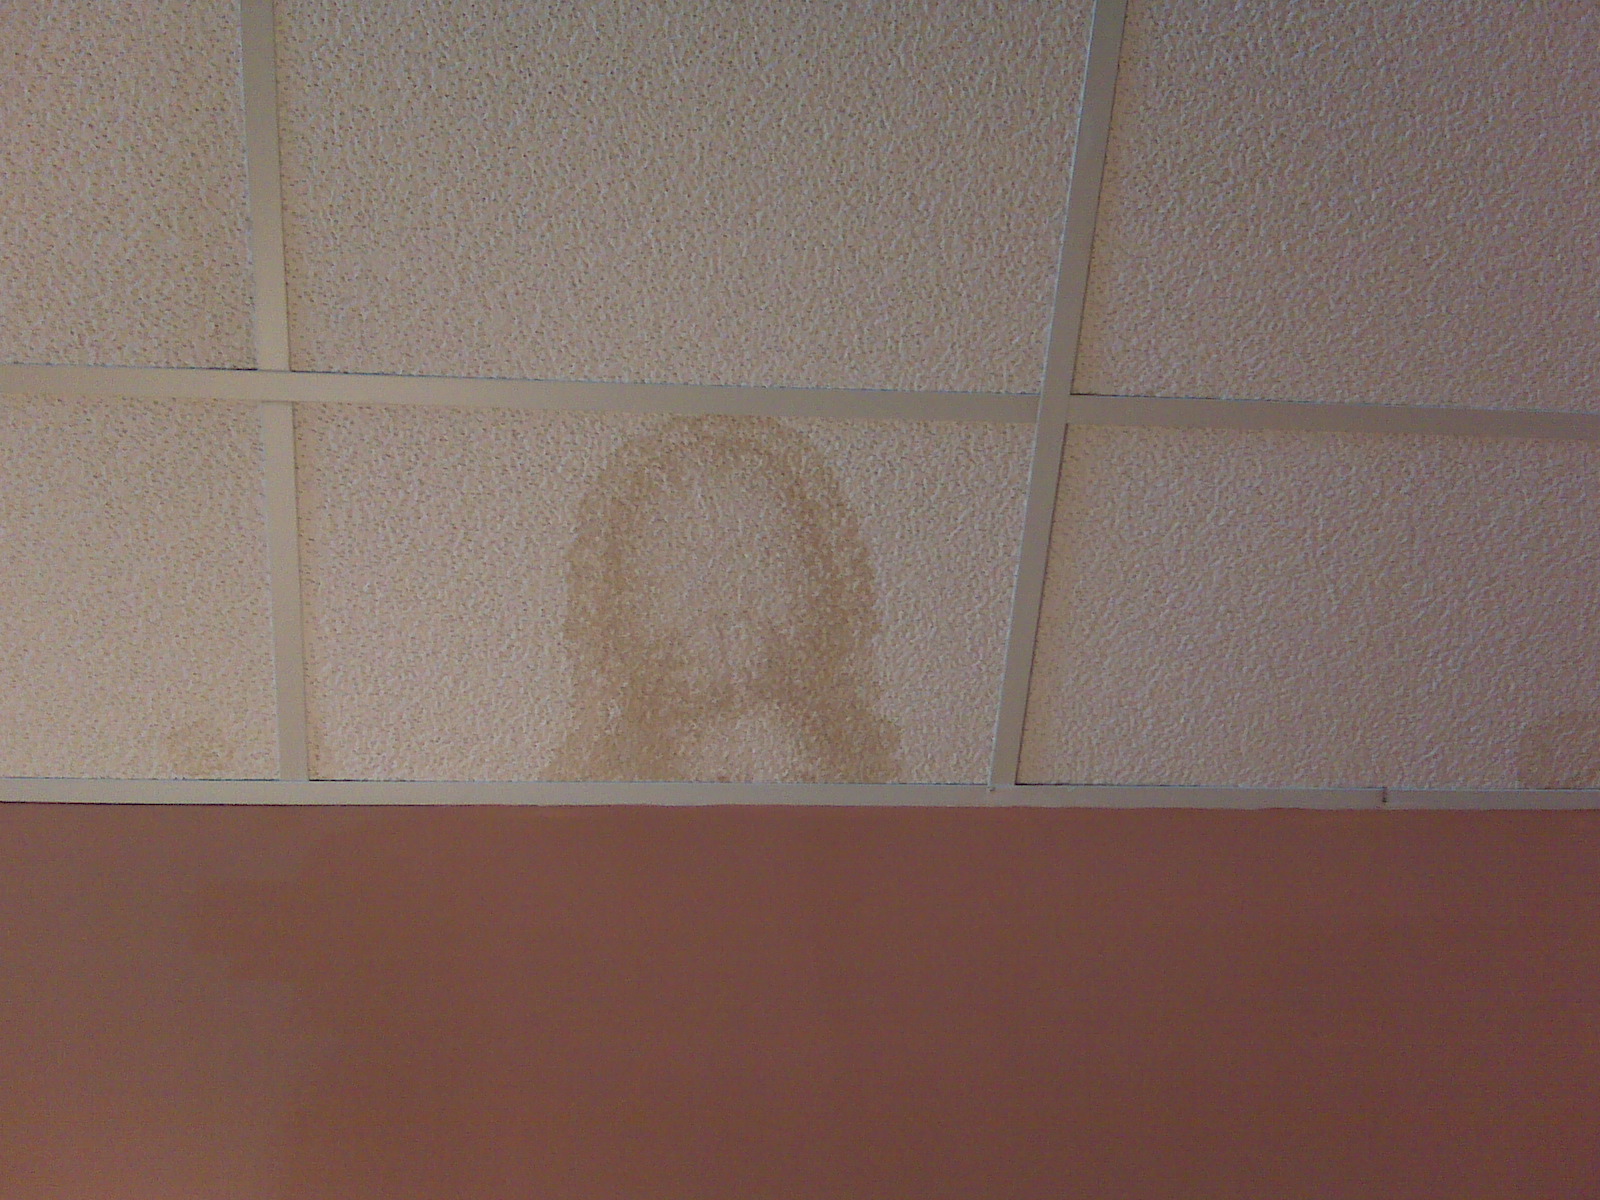 Jesus in the ceiling